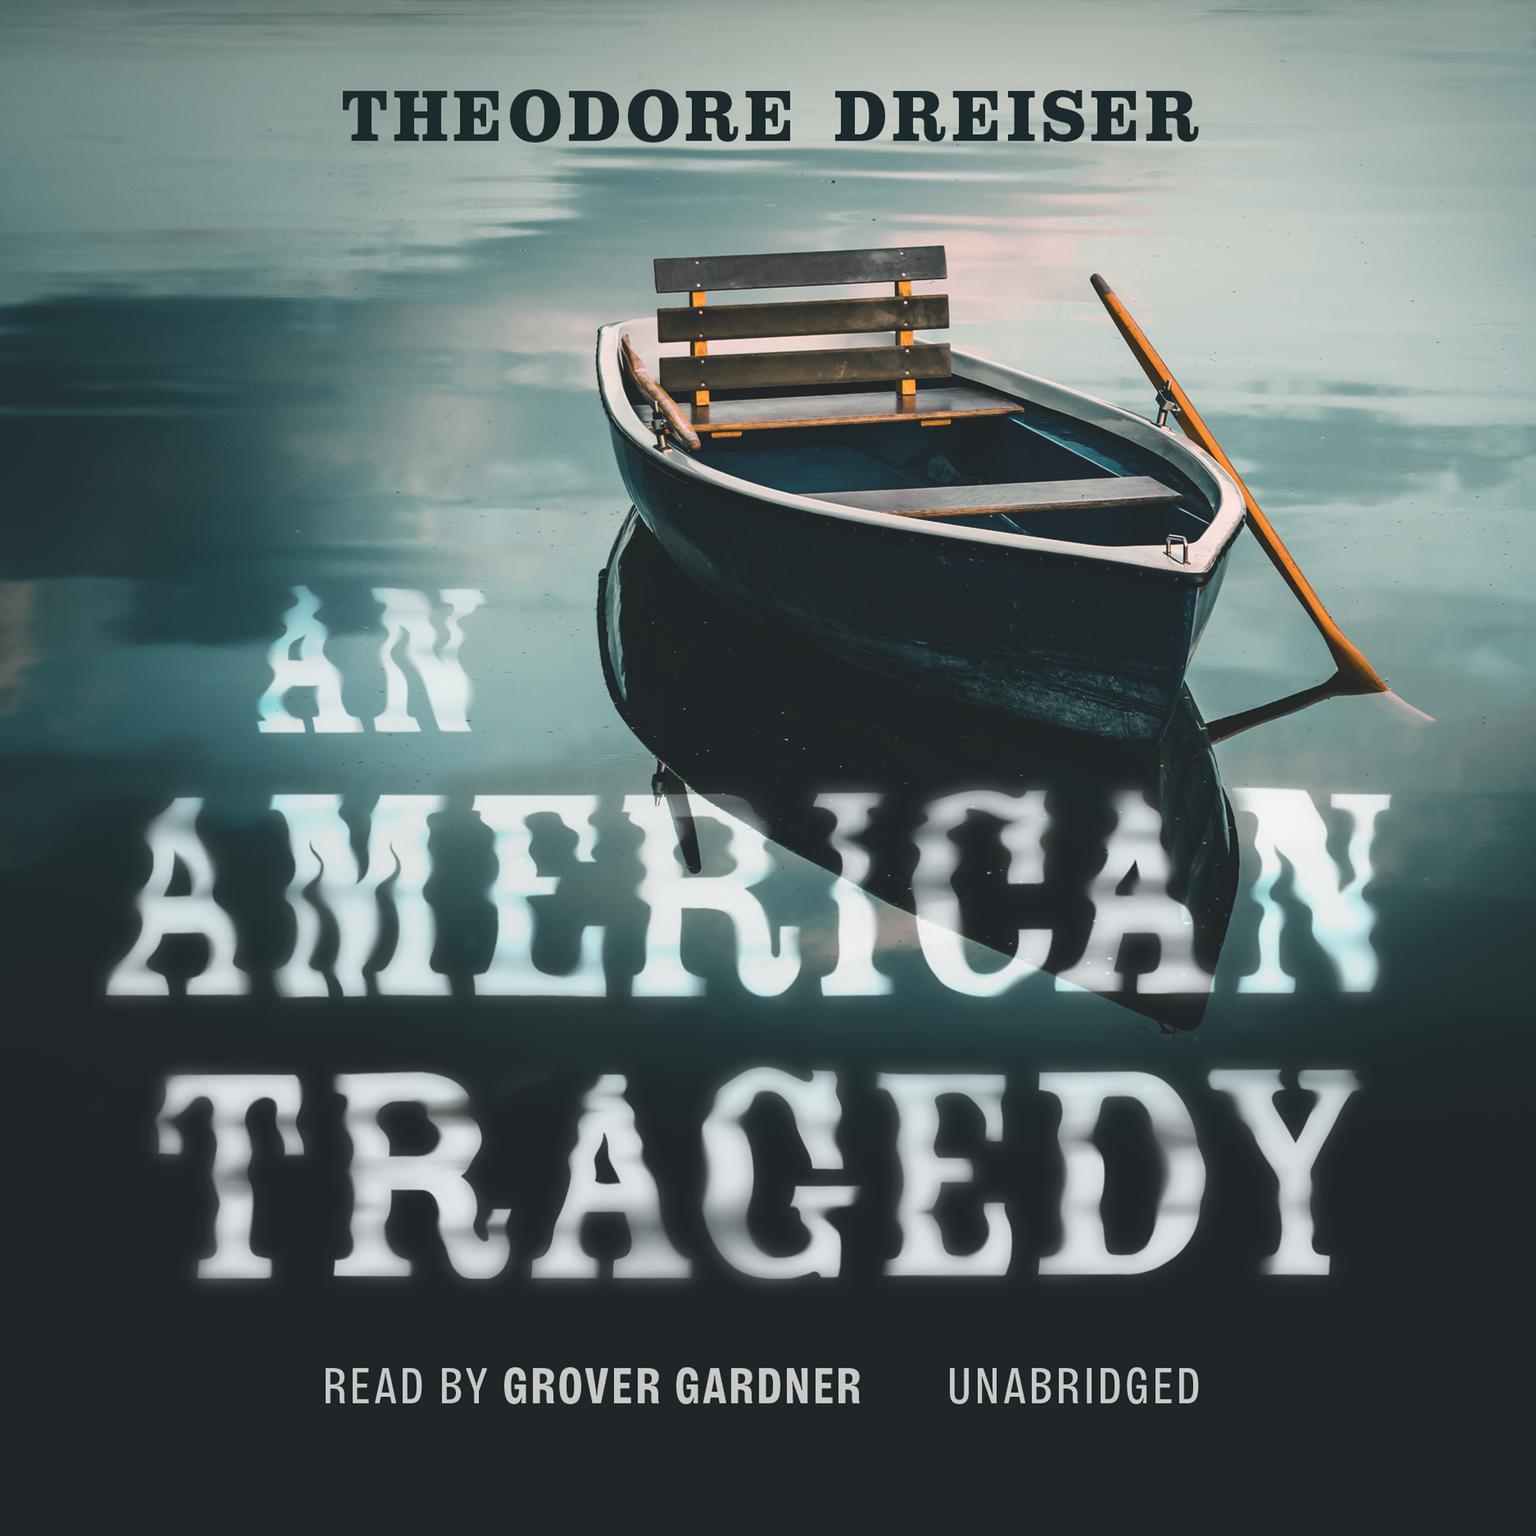 An American Tragedy Audiobook, by Theodore Dreiser